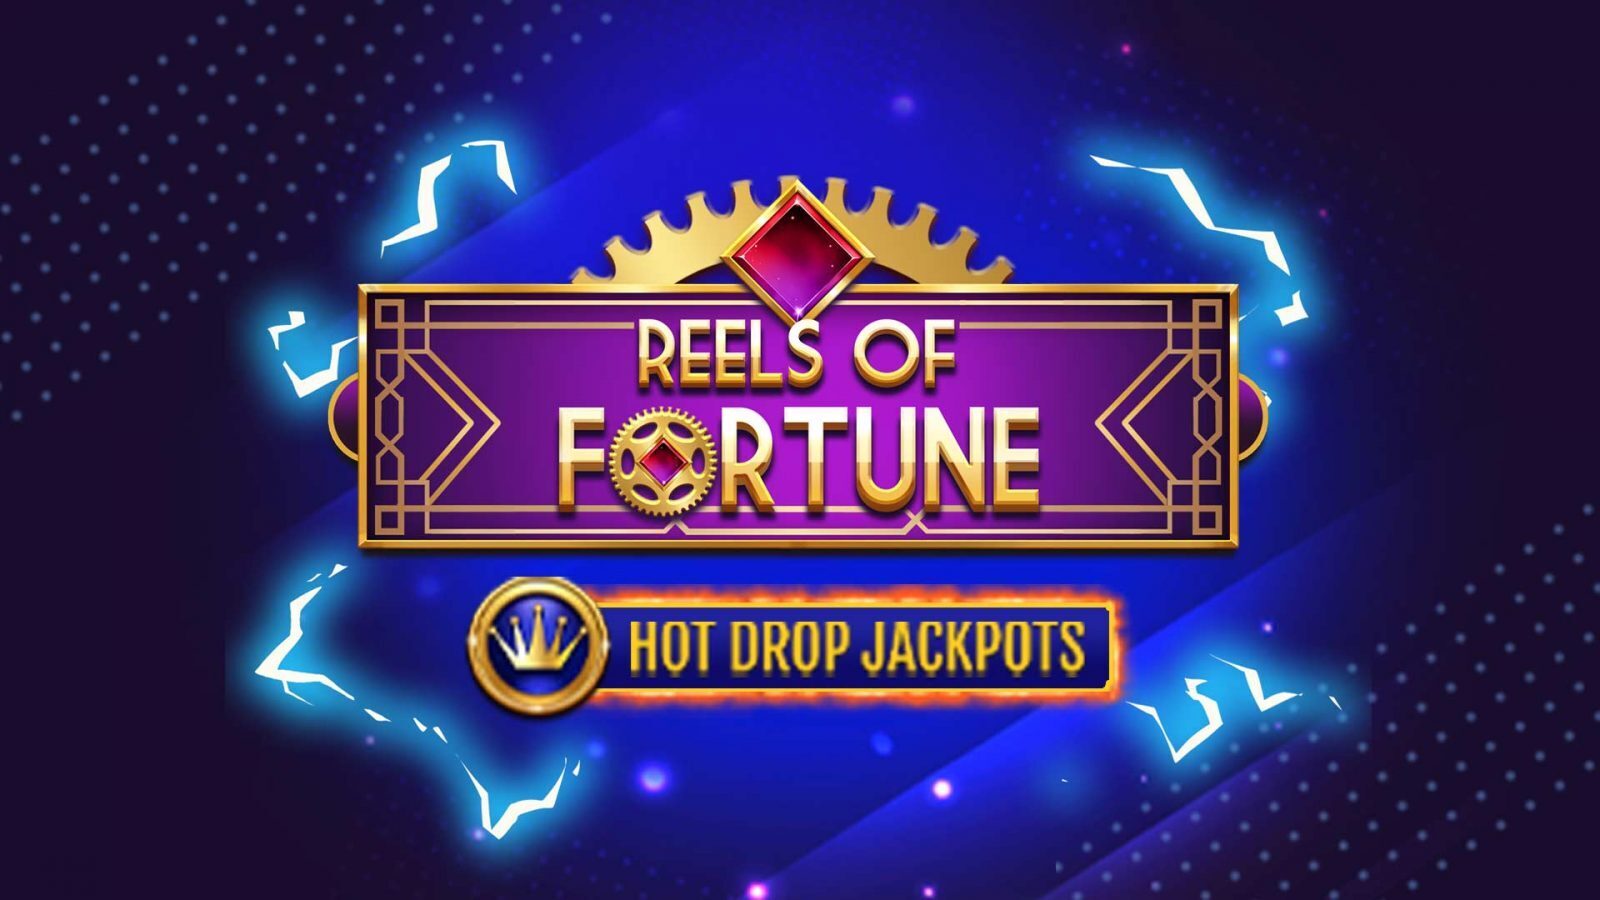 Reels of Fortune hot drop